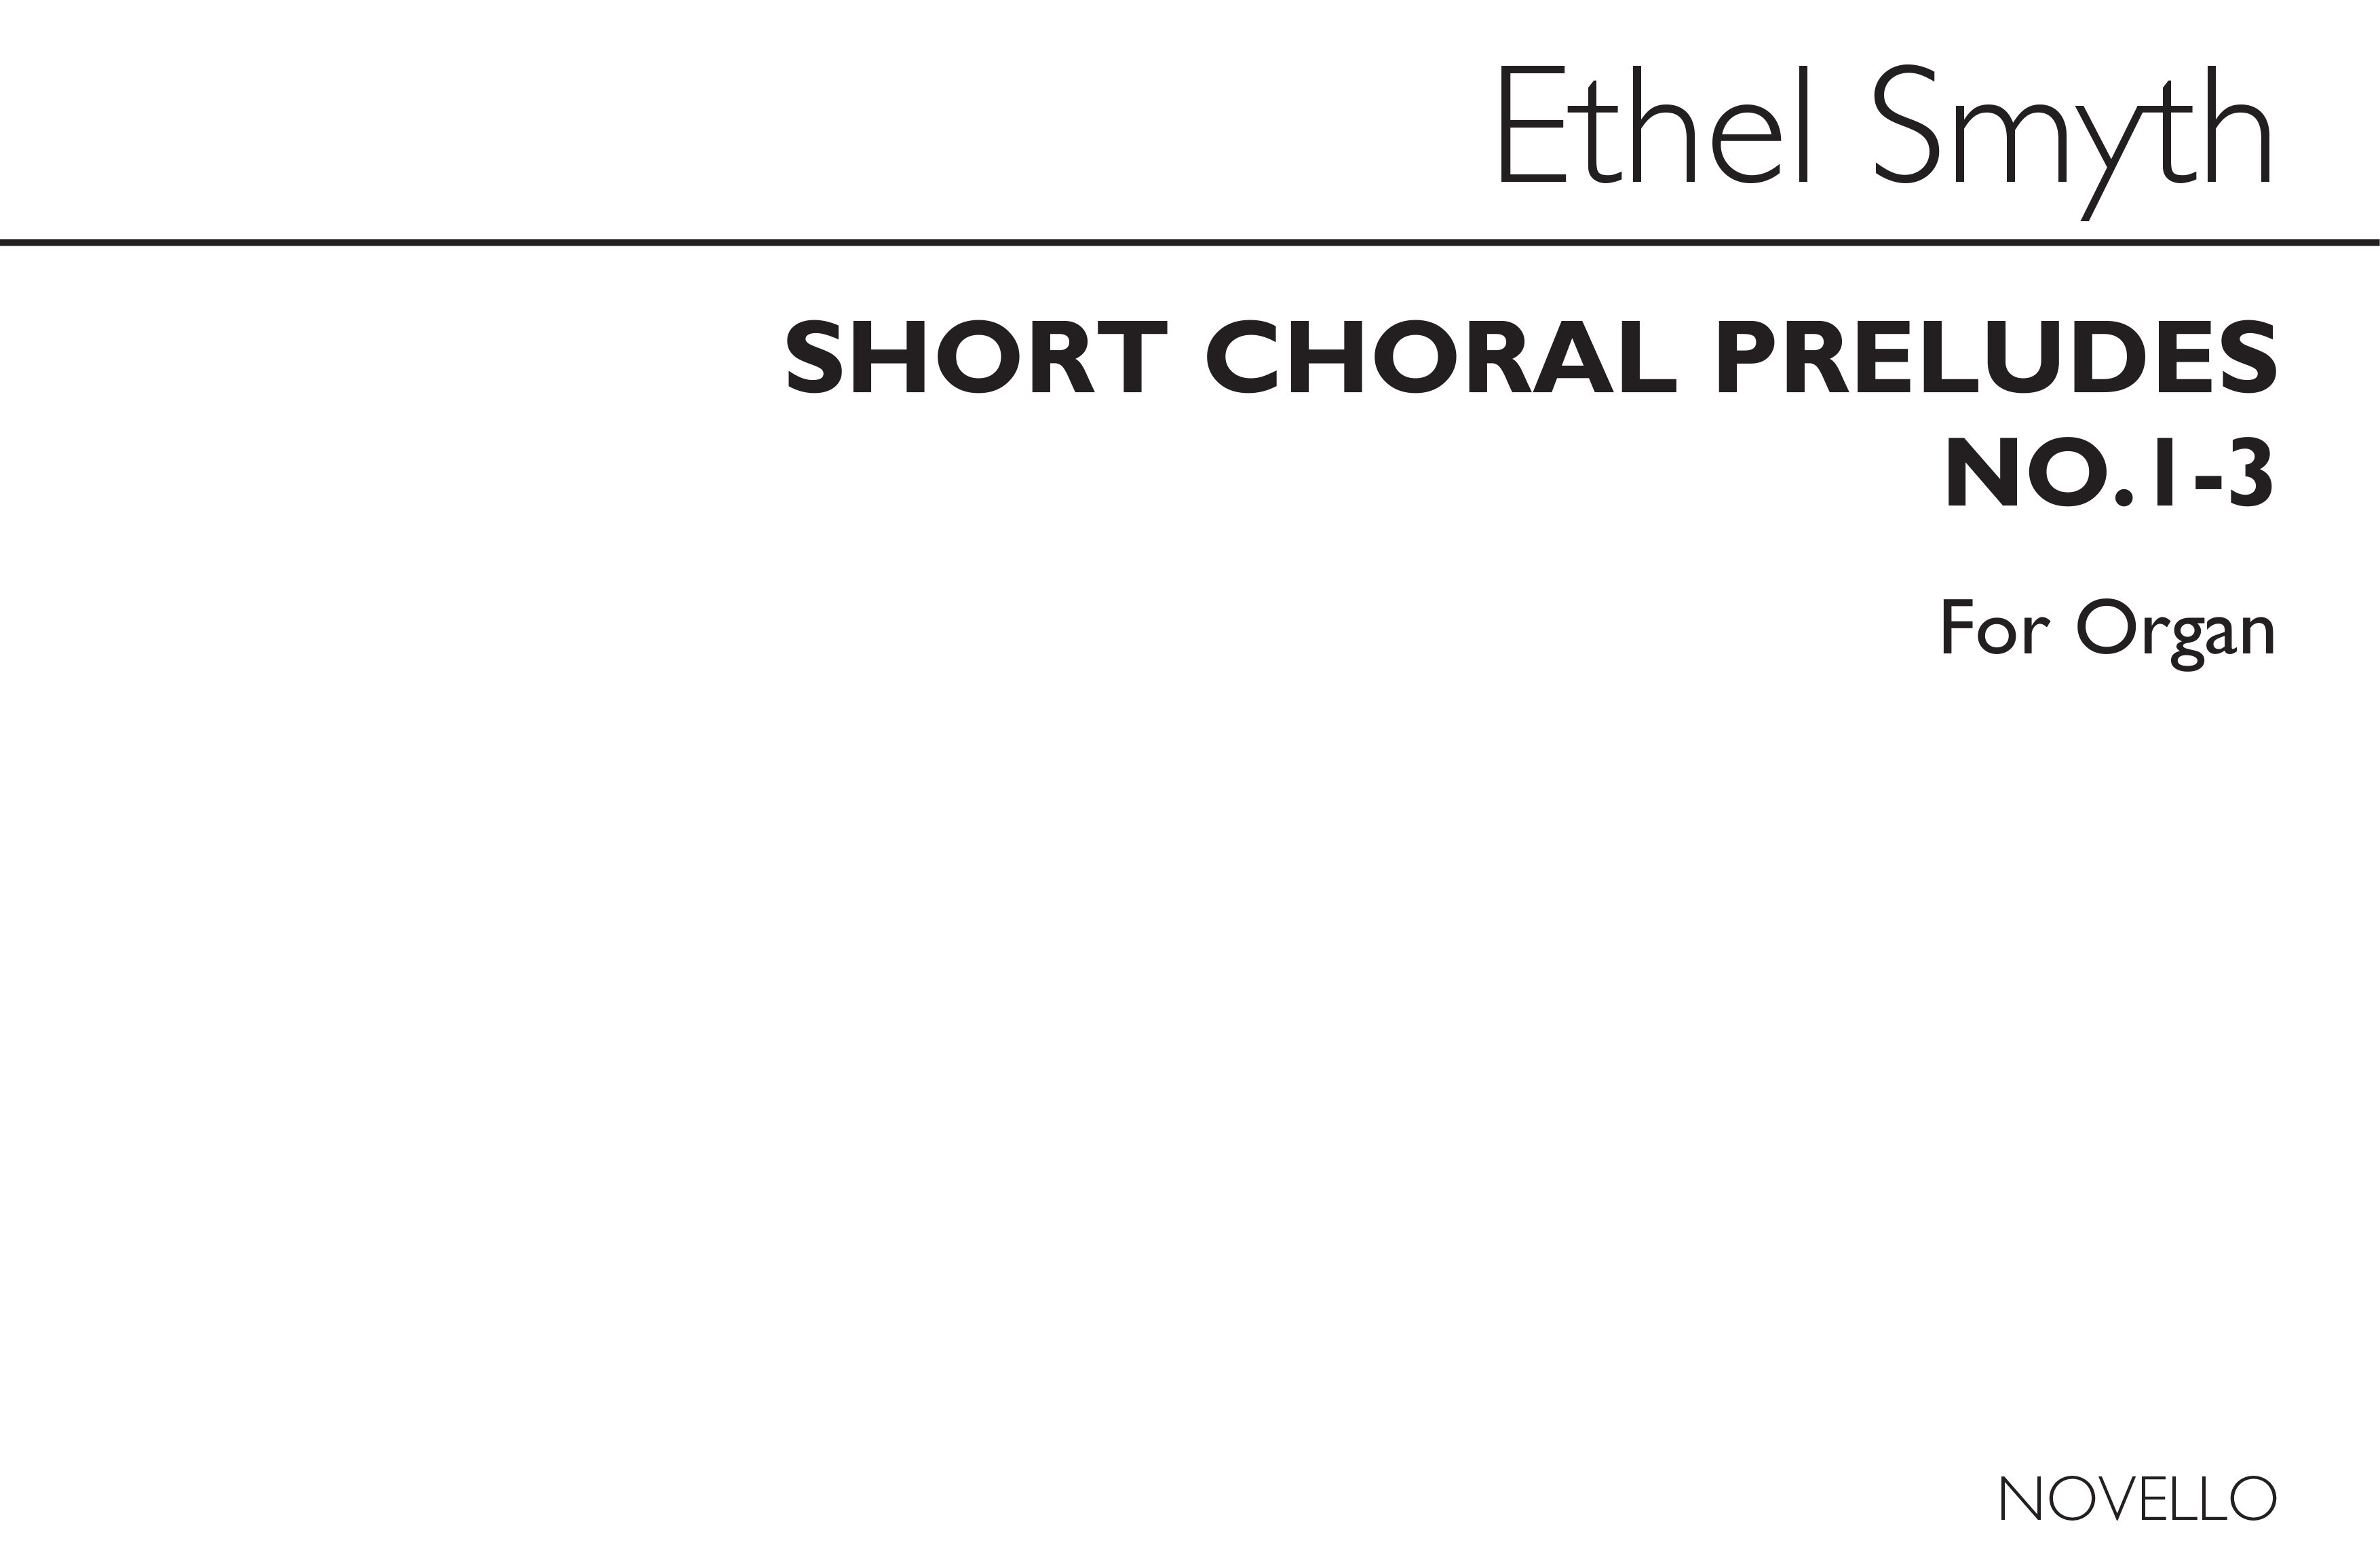 Ethel Smyth: Short Choral Preludes Nos 1-3 for Organ